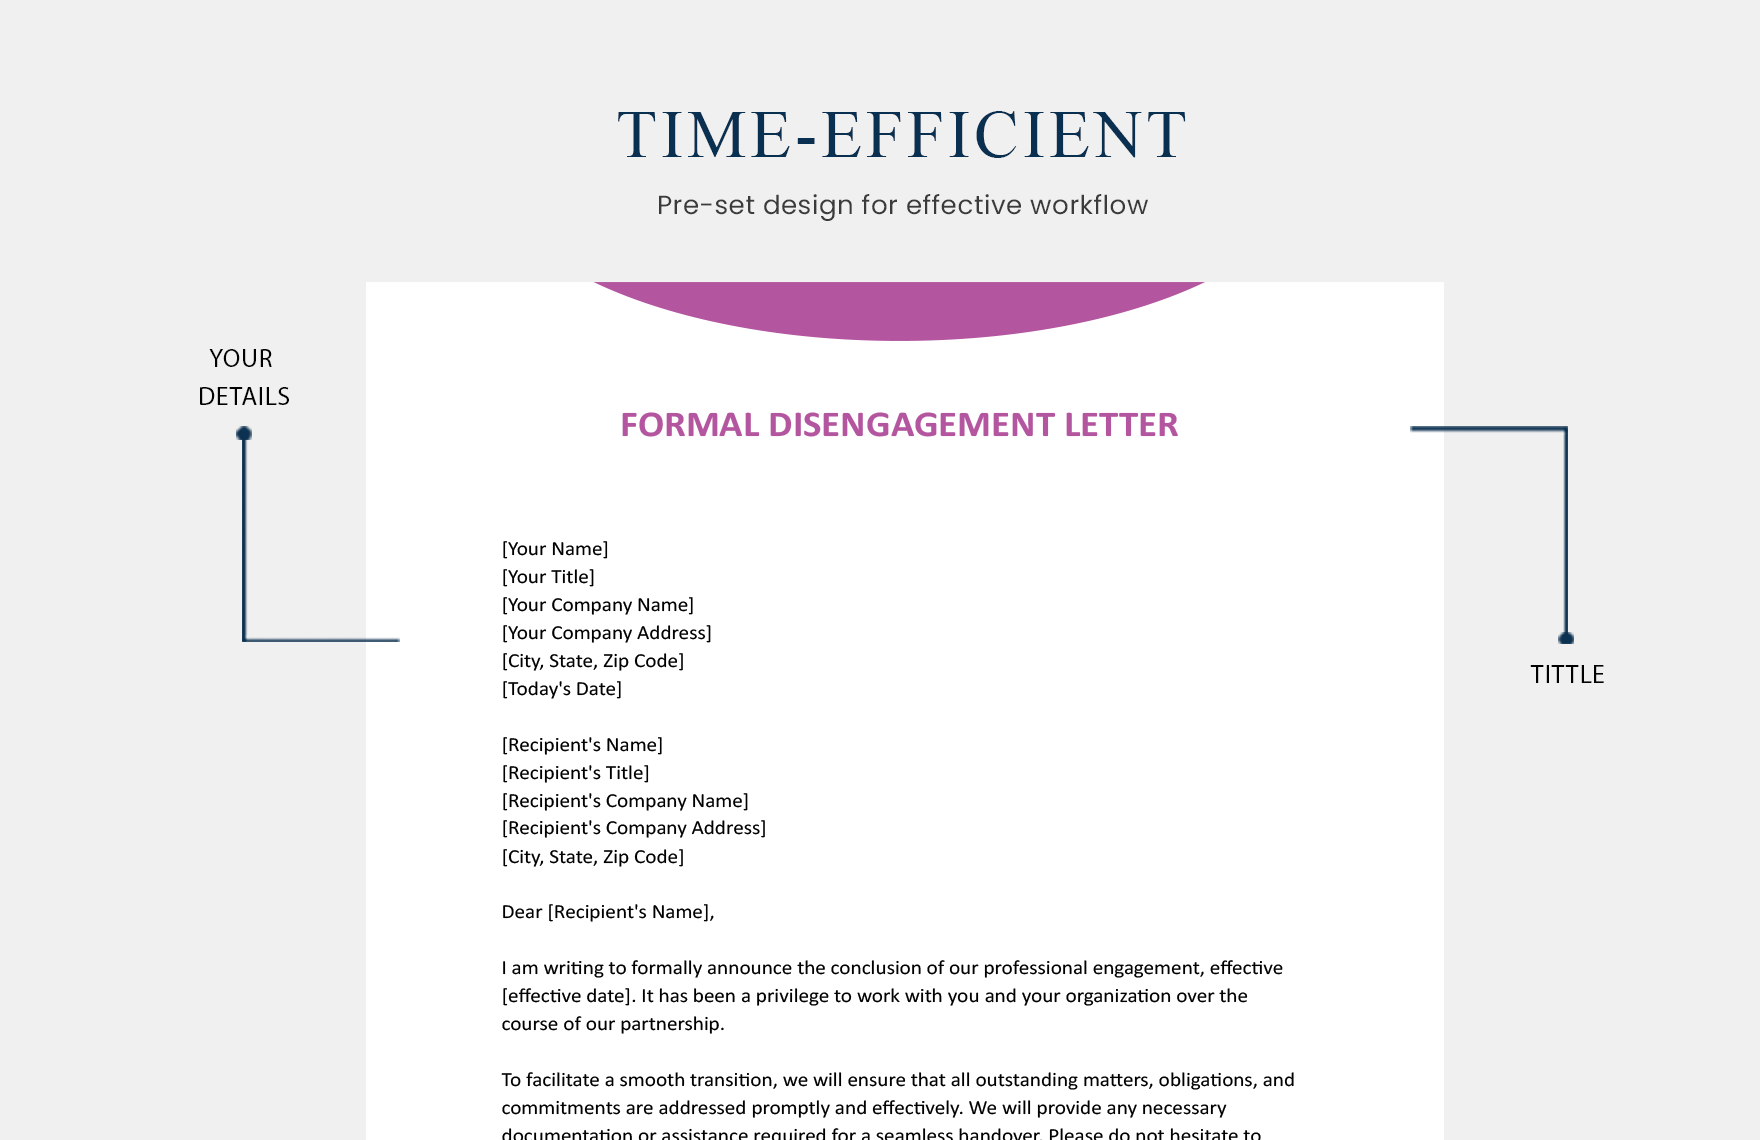 Formal Disengagement Letter